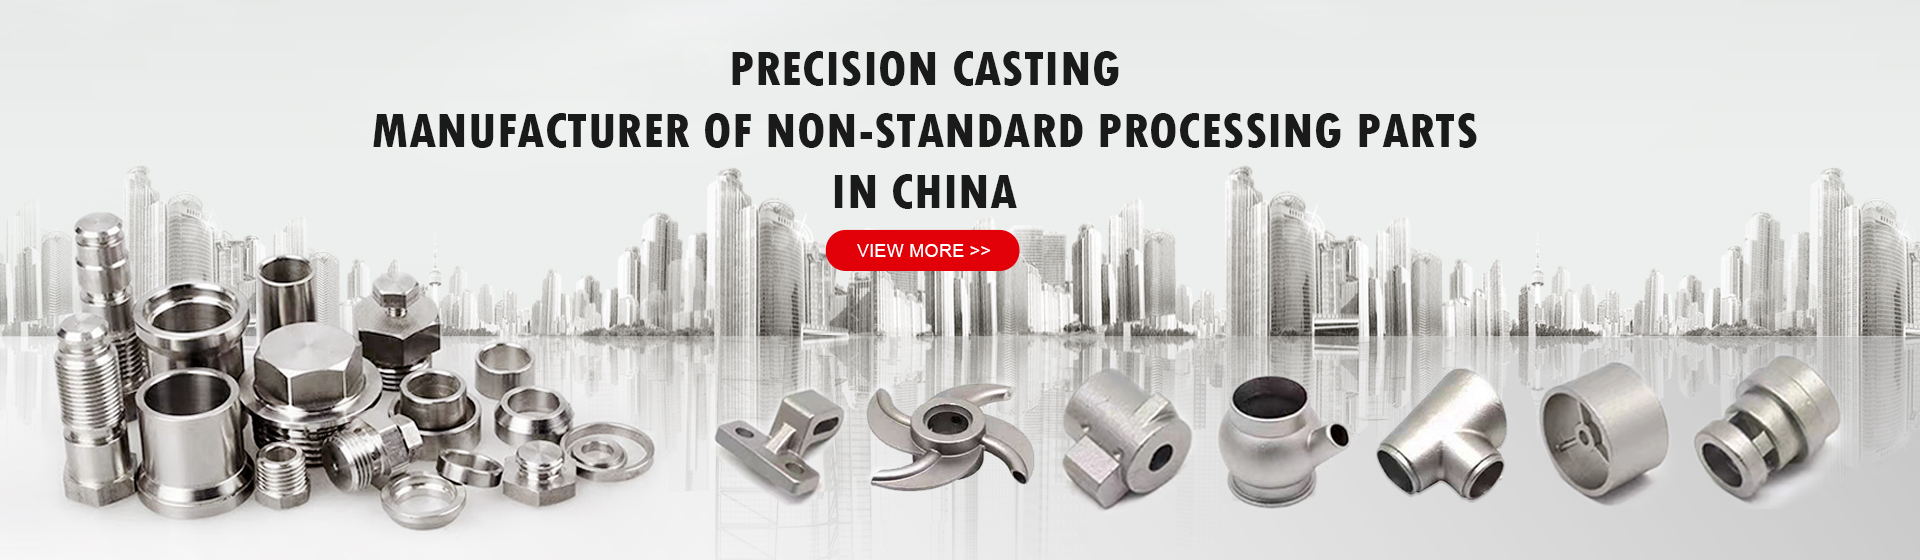 Jiangsu Dingtian Stainless Steel Products Co., Ltd.